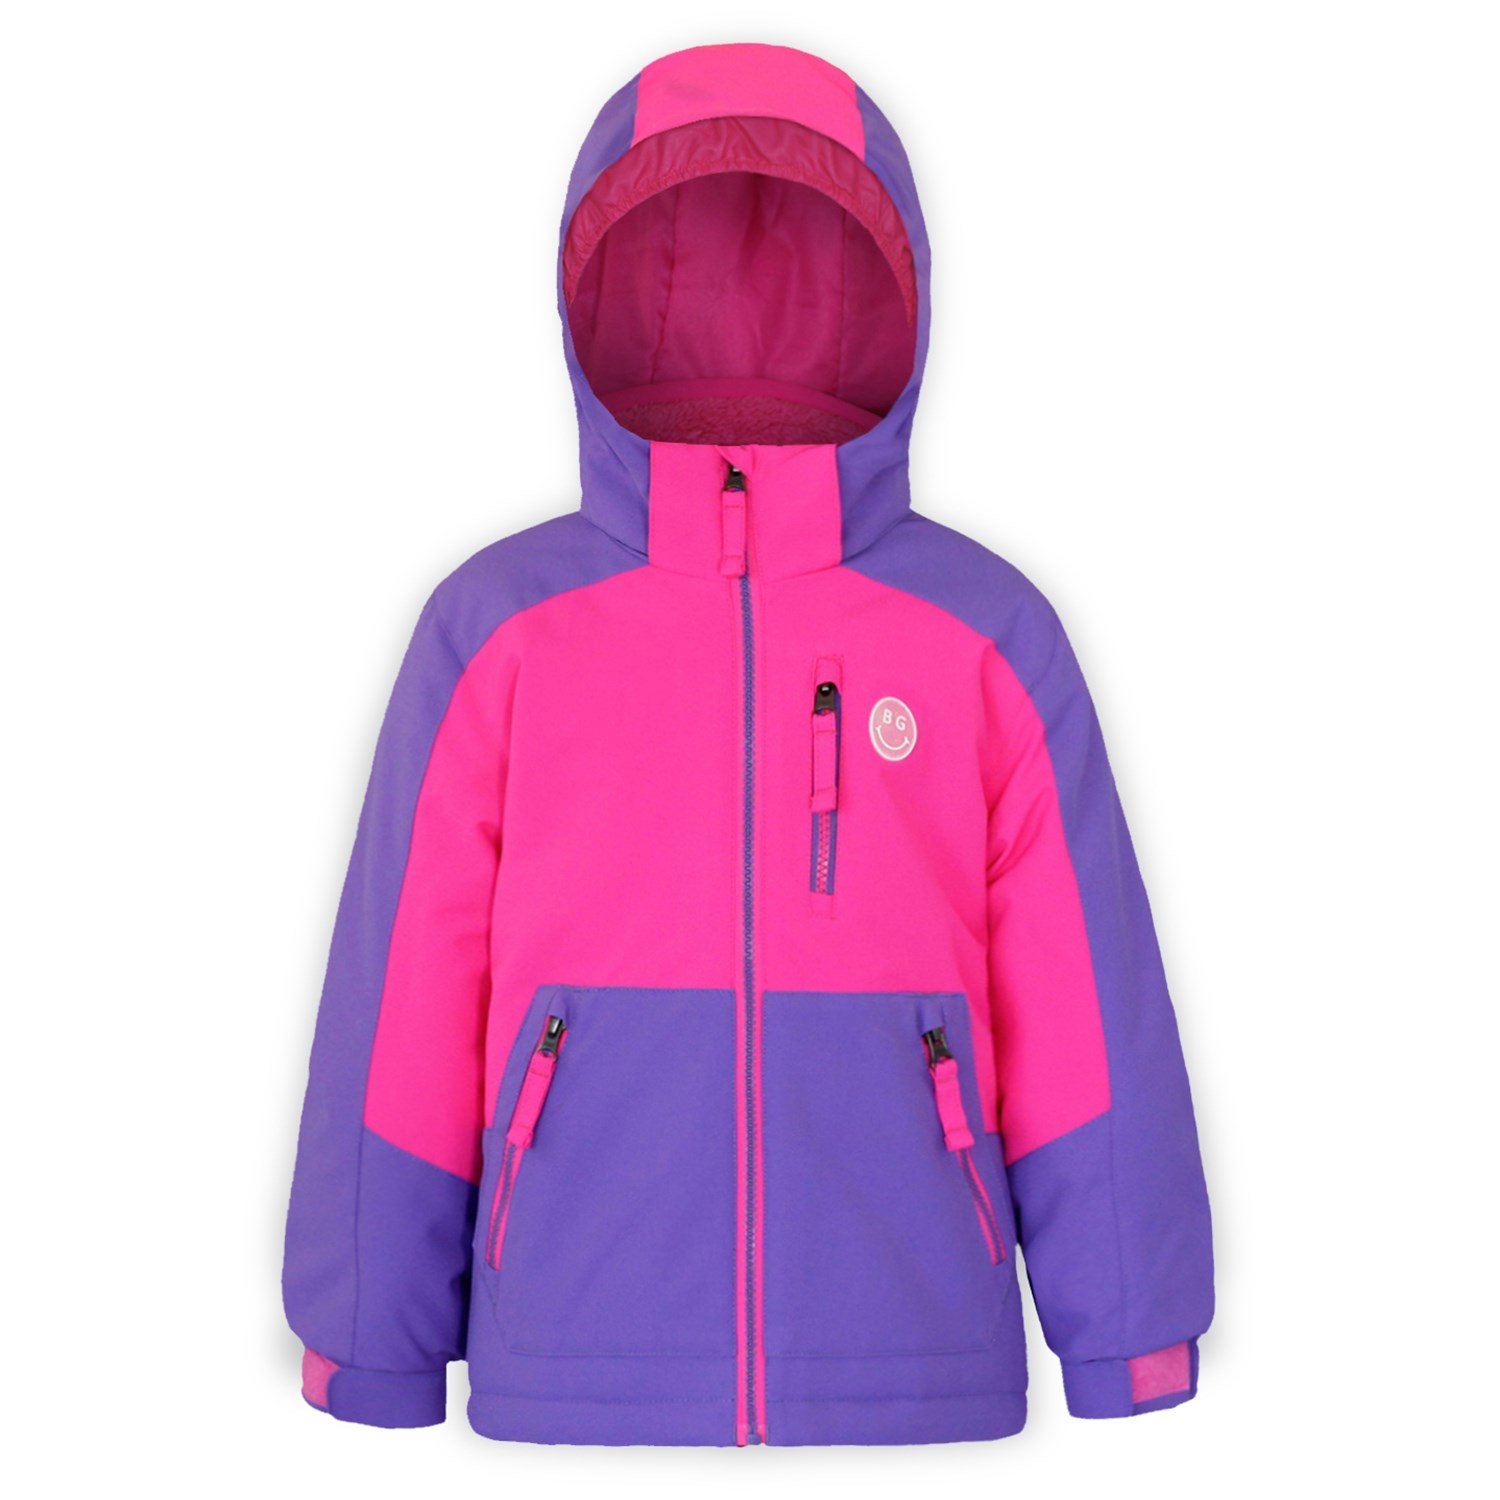 Утепленная куртка Boulder Gear Lena, розовый